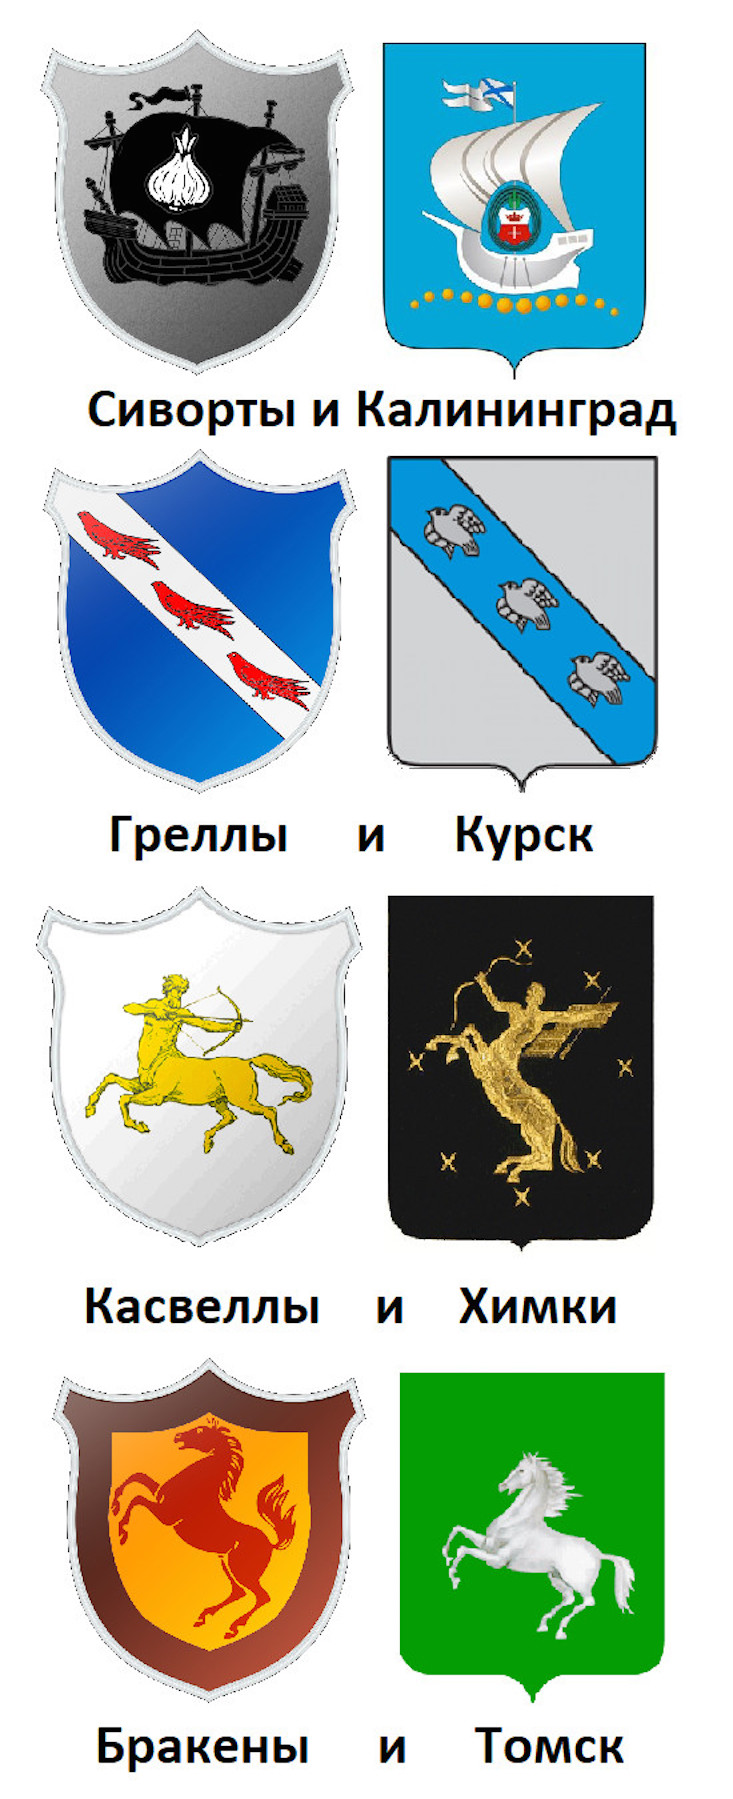 From top row to bottom row: Seaworth — Kaliningrad, Grell — Kursk, Caswell — Khimki, Bracken — Tomsk. Image: nikodre
